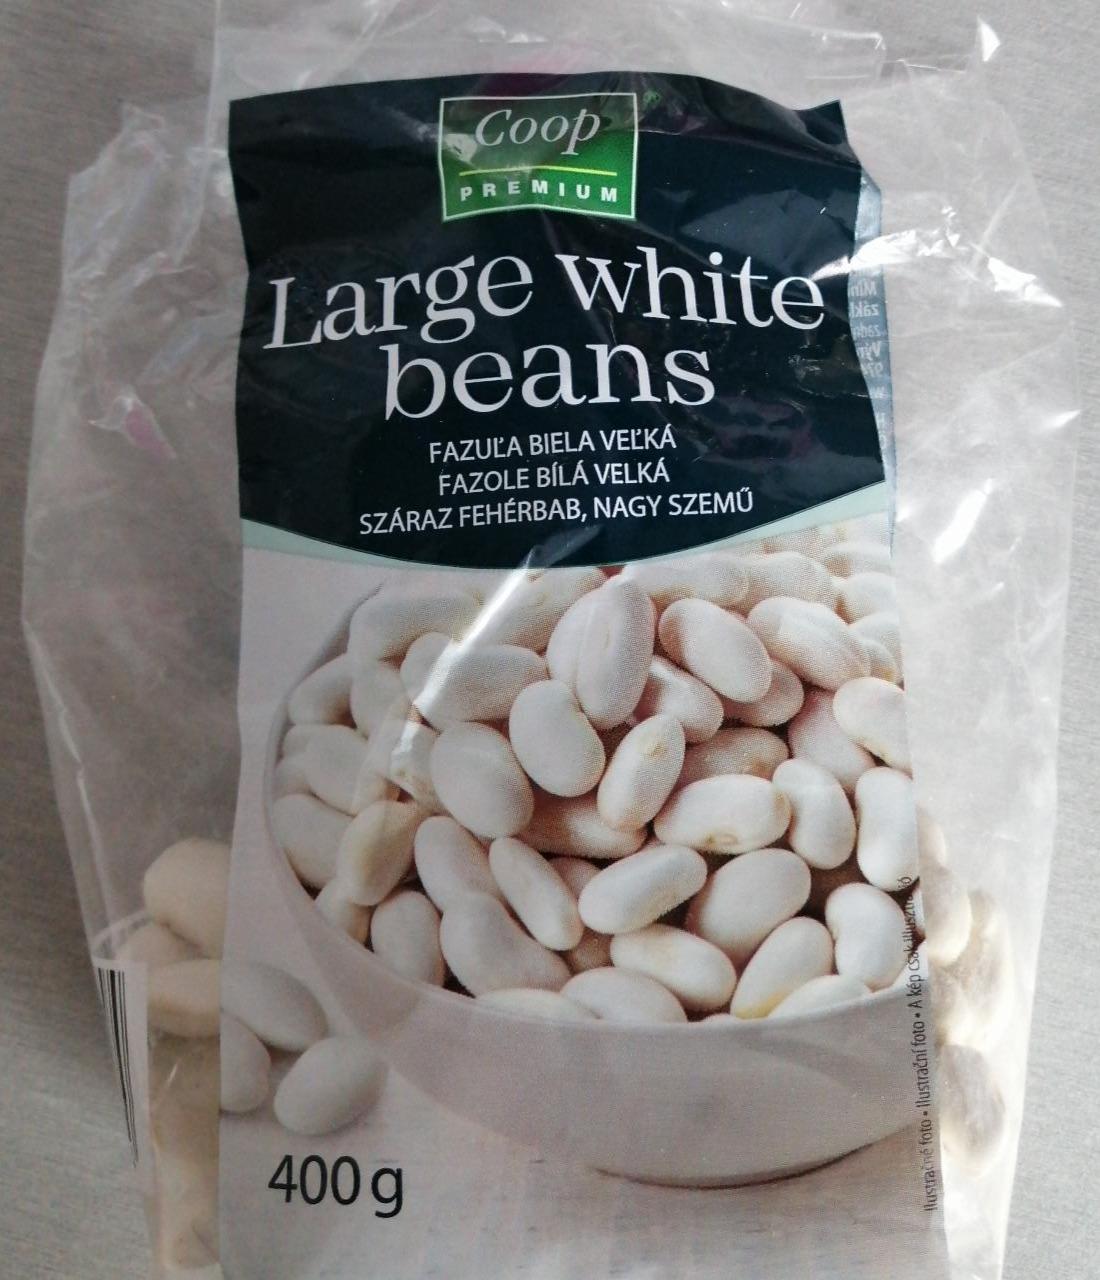 Képek - Large white beans Coop Premium